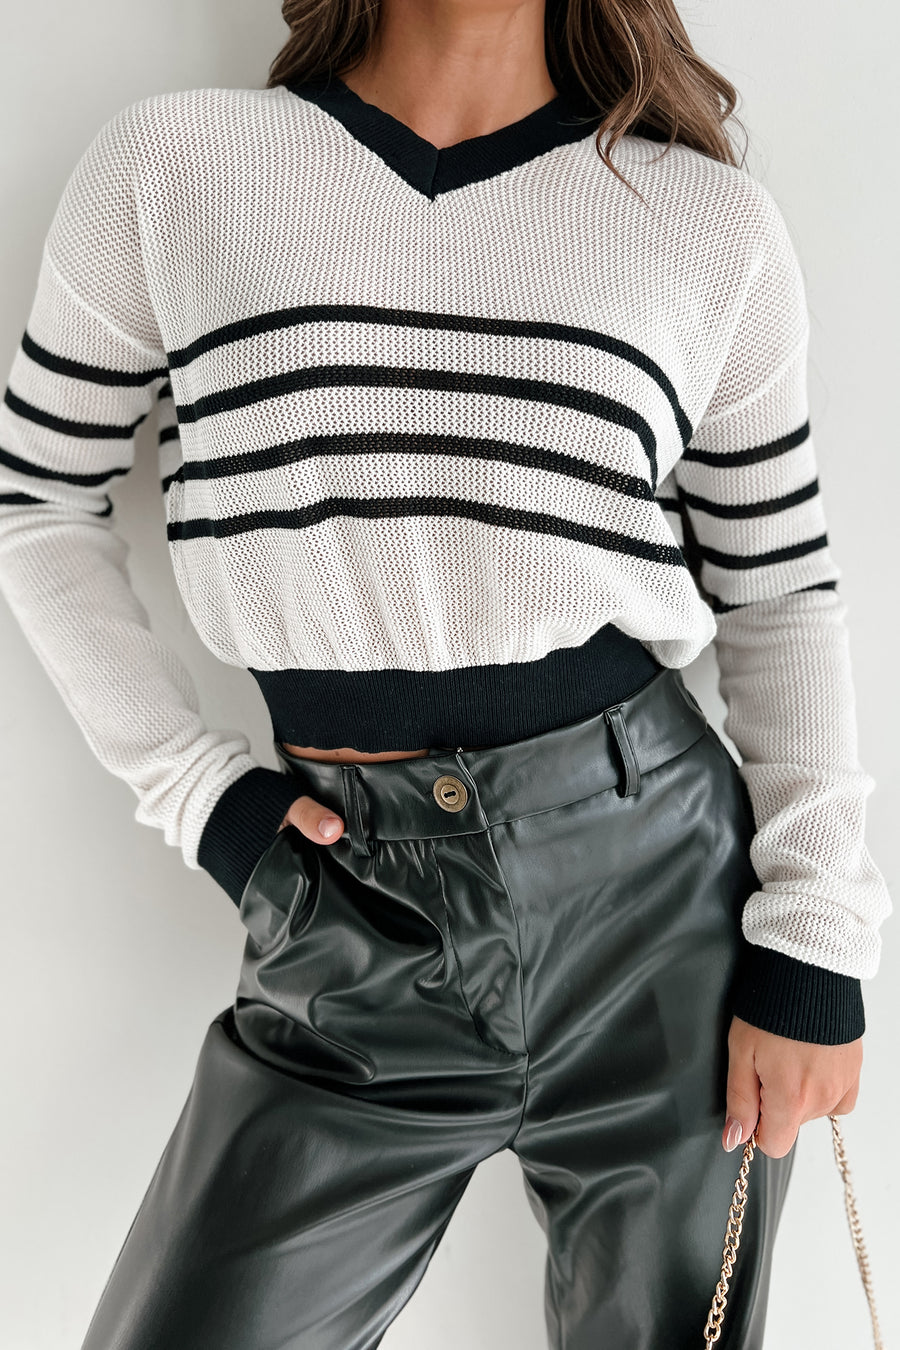 In My College Days Open Knit Striped Sweater (White/Black) - NanaMacs